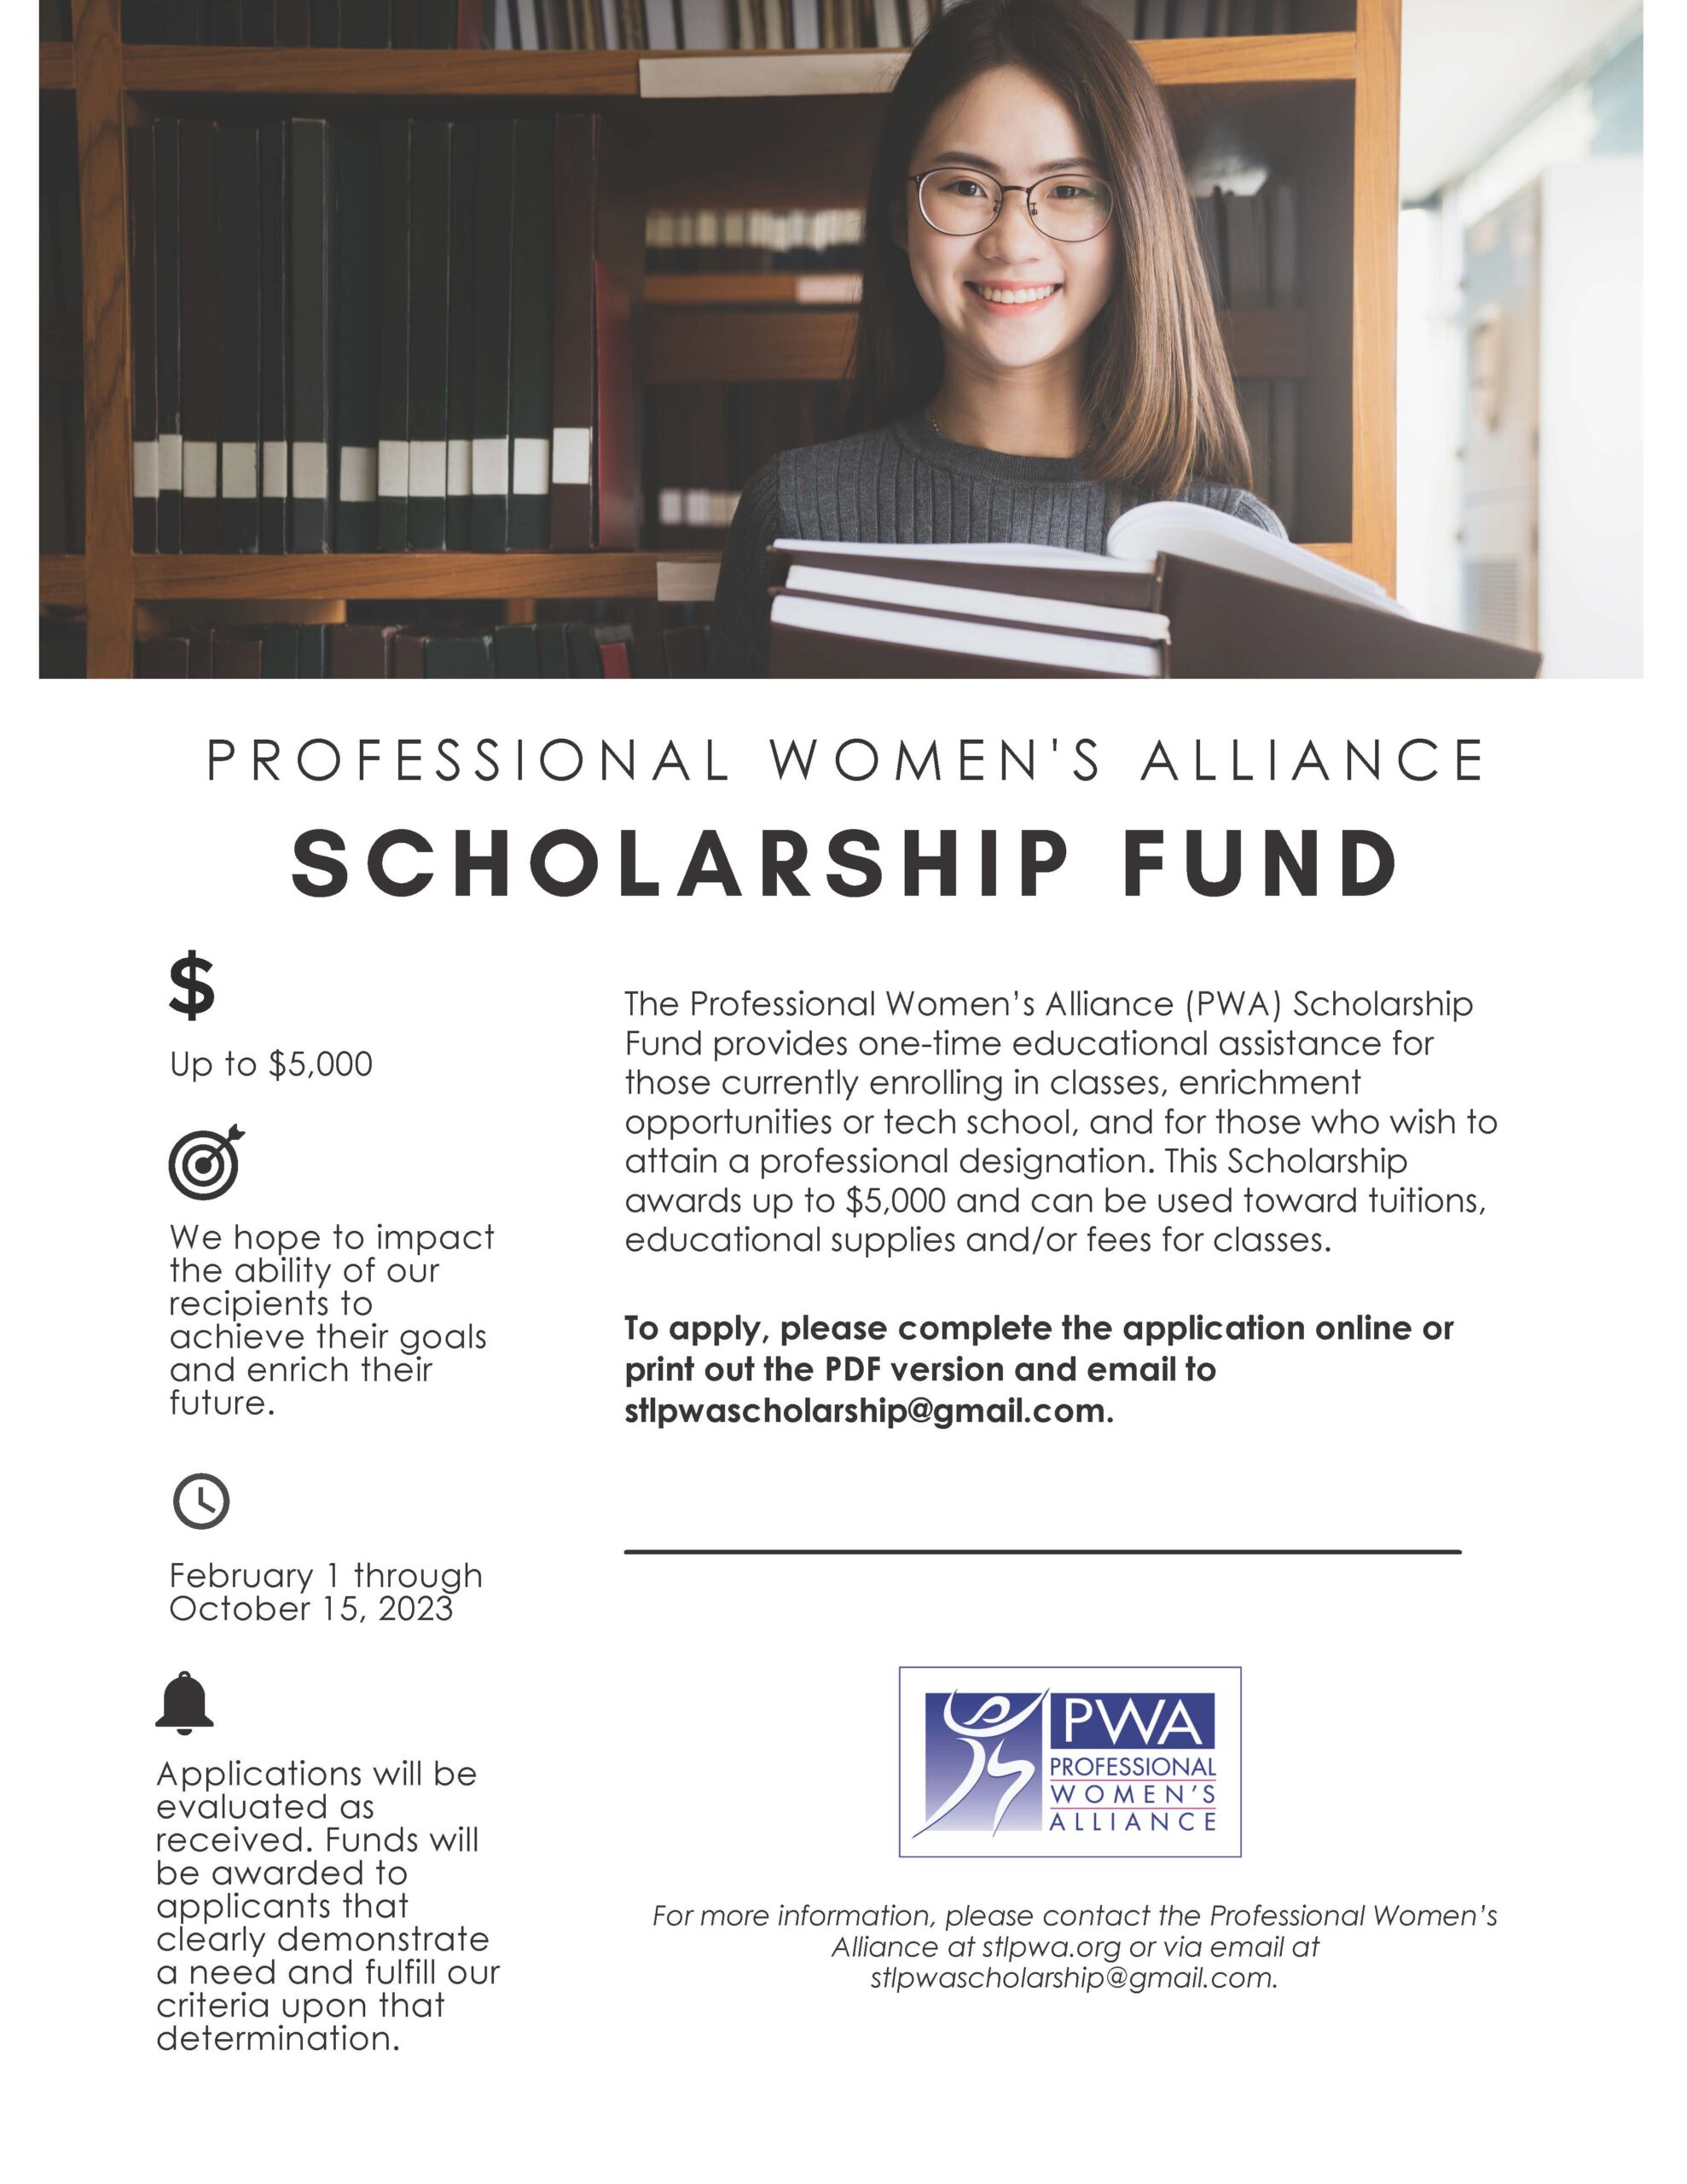 2023-Scholarship-Fund-Flyer-2-scaled